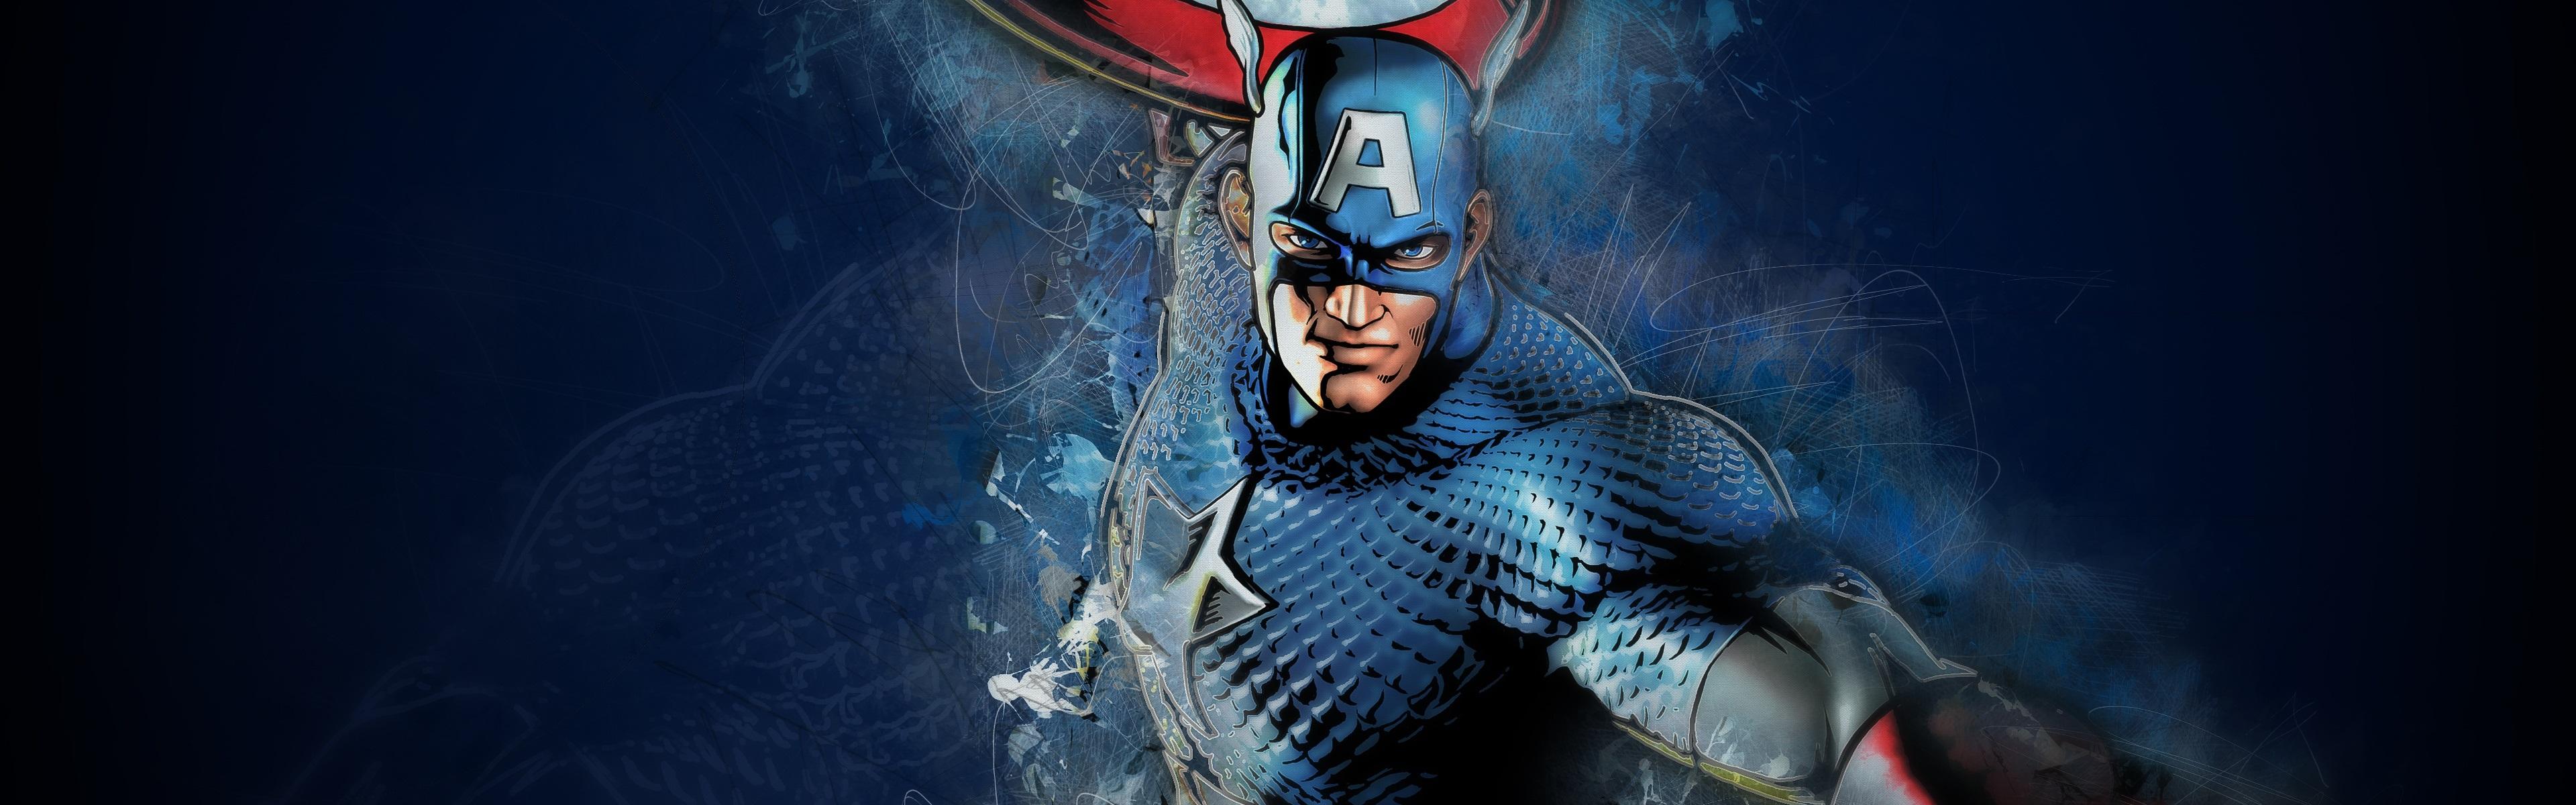 Wallpaper Captain America, shield, mask, Marvel comics, art picture